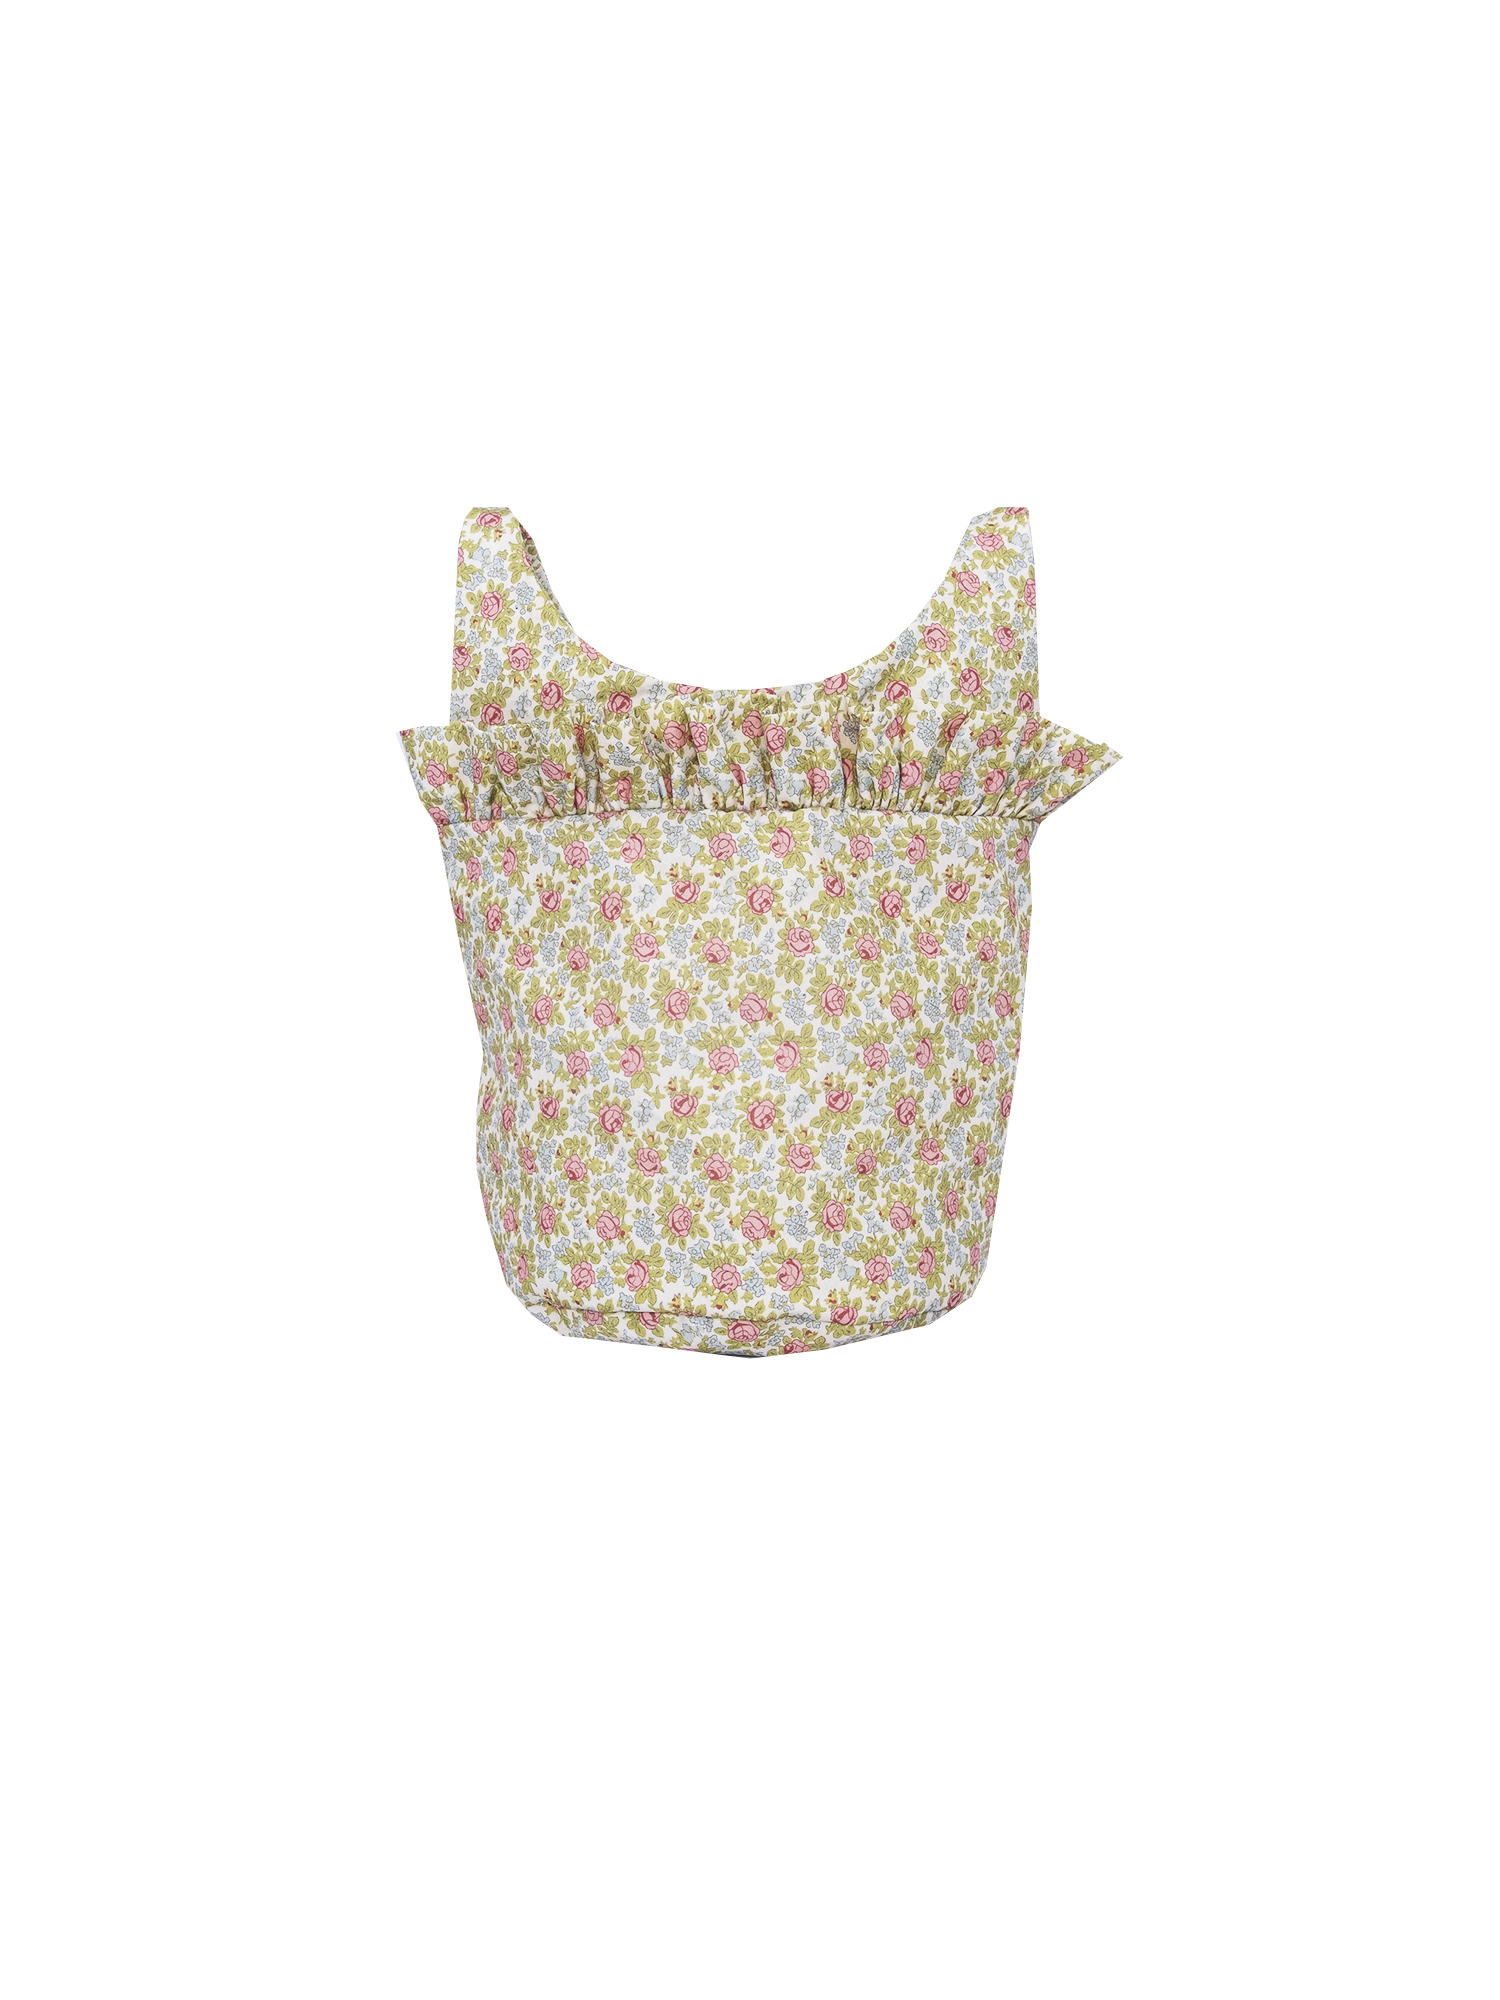 JASMINE - bucket bag with shoulder strap  in cotton Ephrussi print